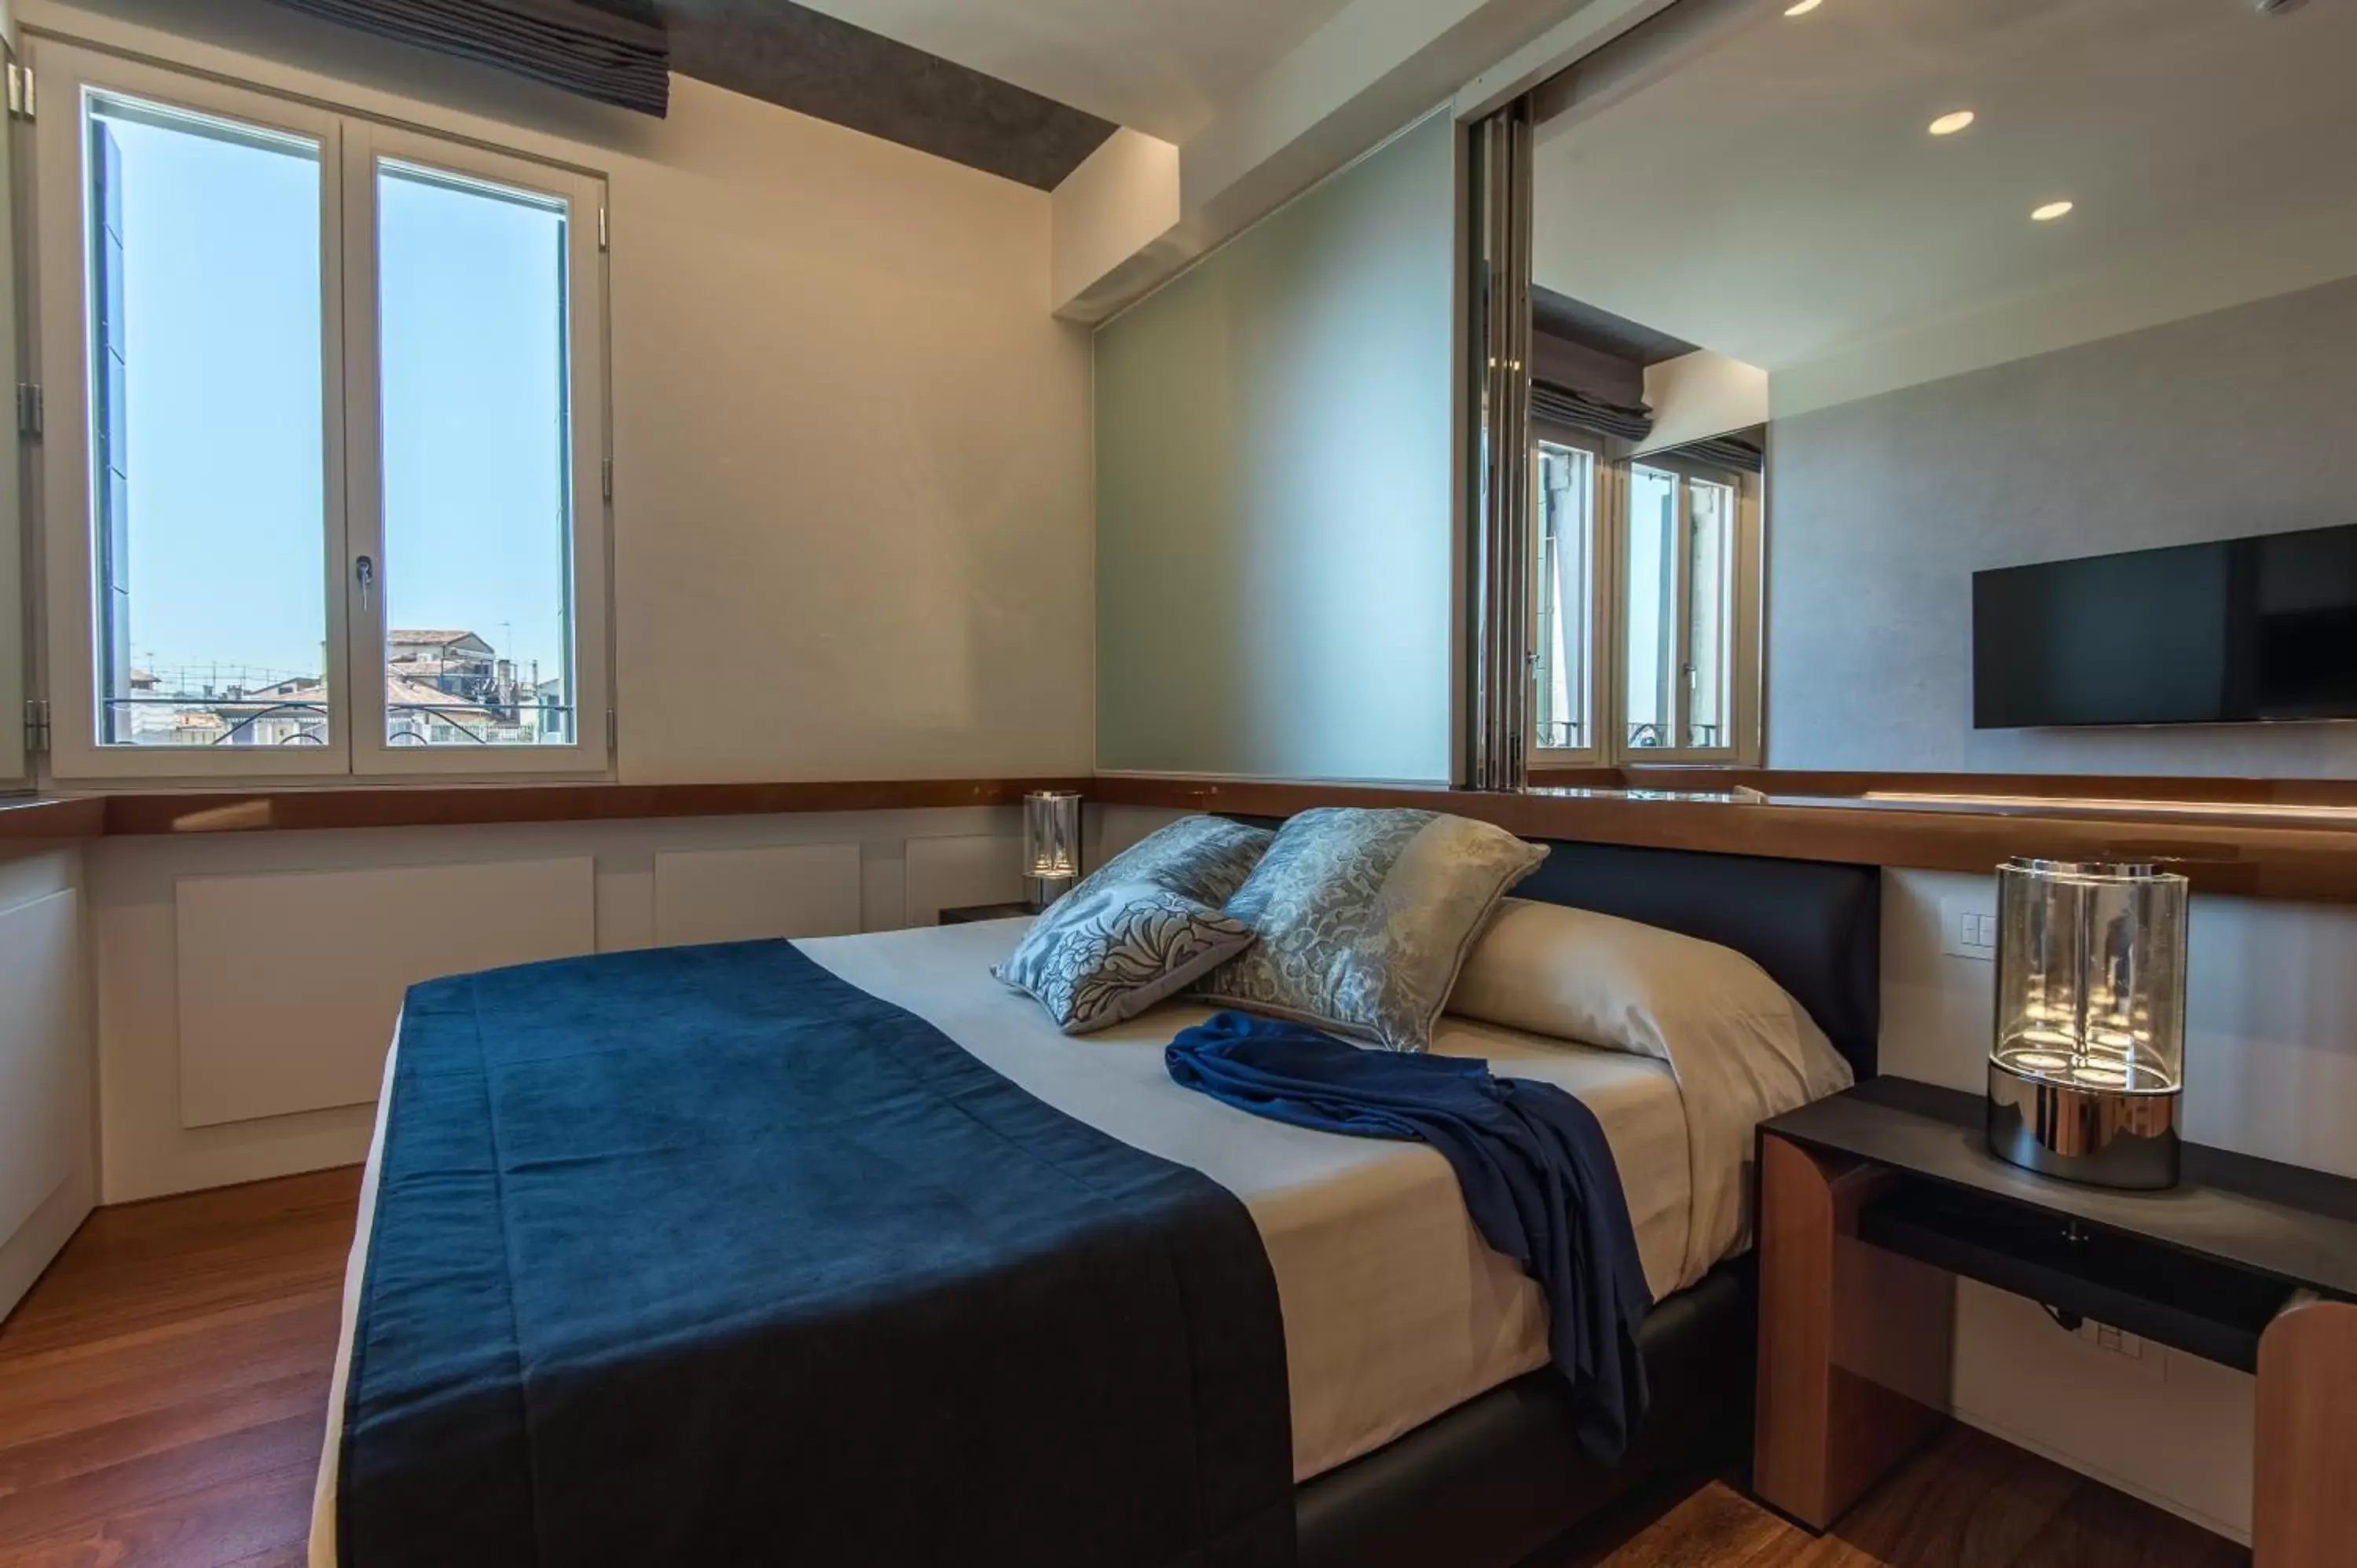 Bed, Room Photo in Hotel Rialto